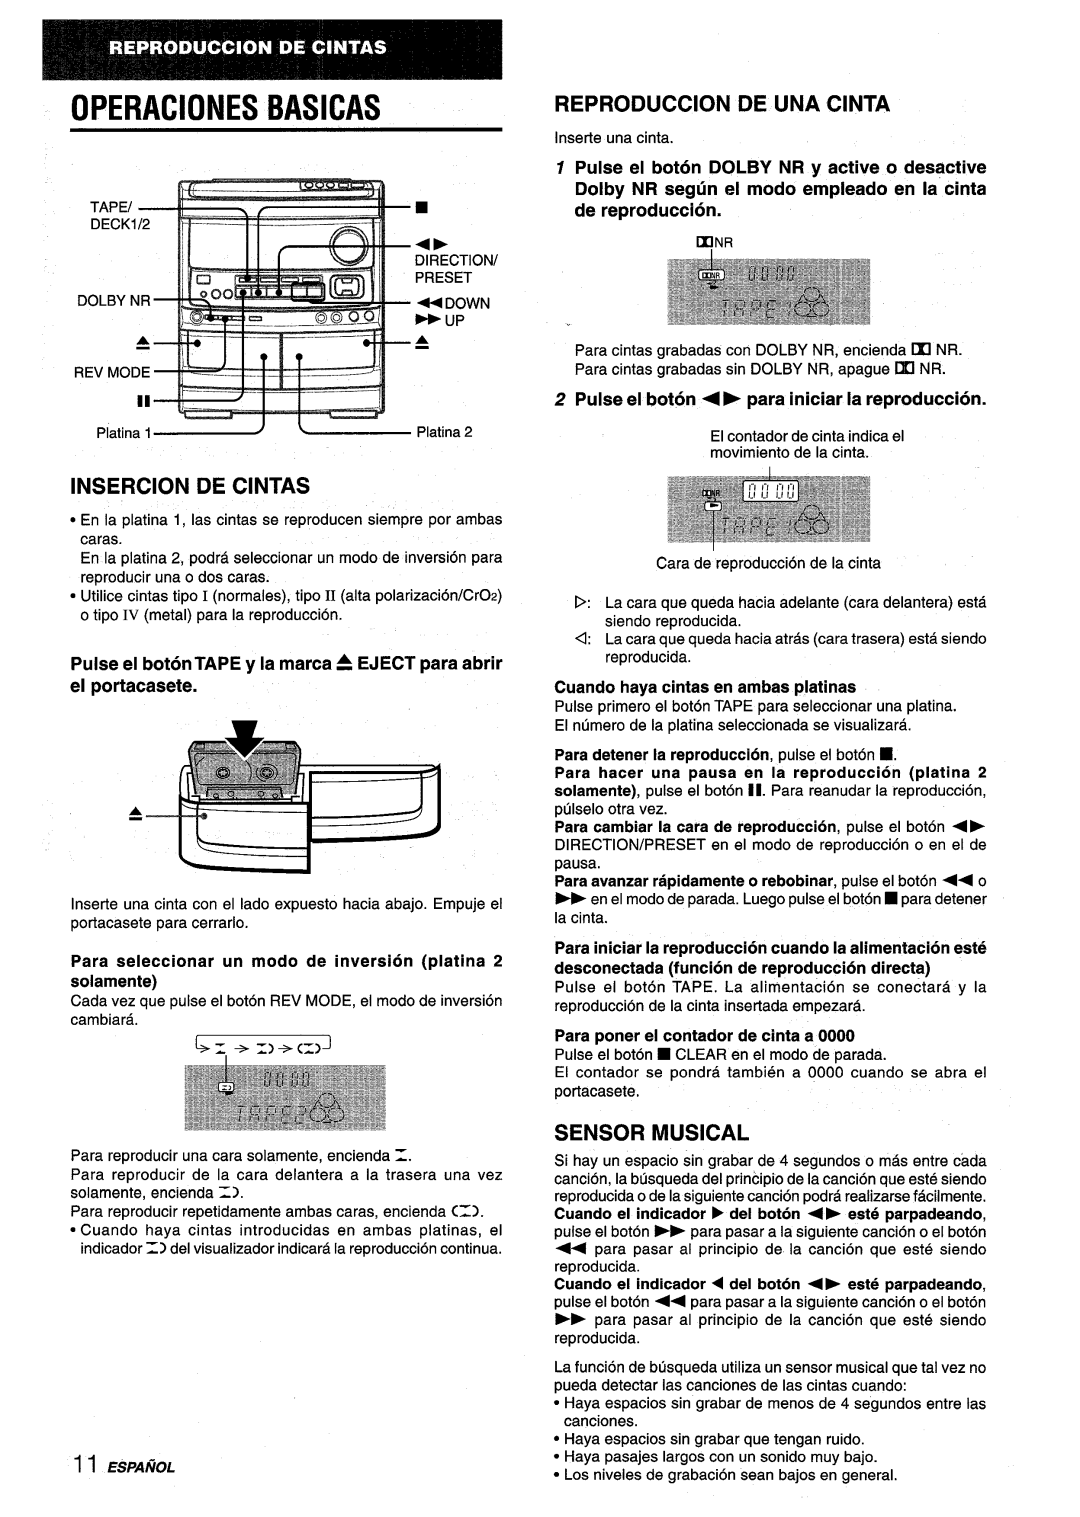 Aiwa NSX-V9000 manual Insercion De Cintas, Reproduction De Una Cinta, Sensor Musical, ESPAfiOL, Operaciones Basicas 